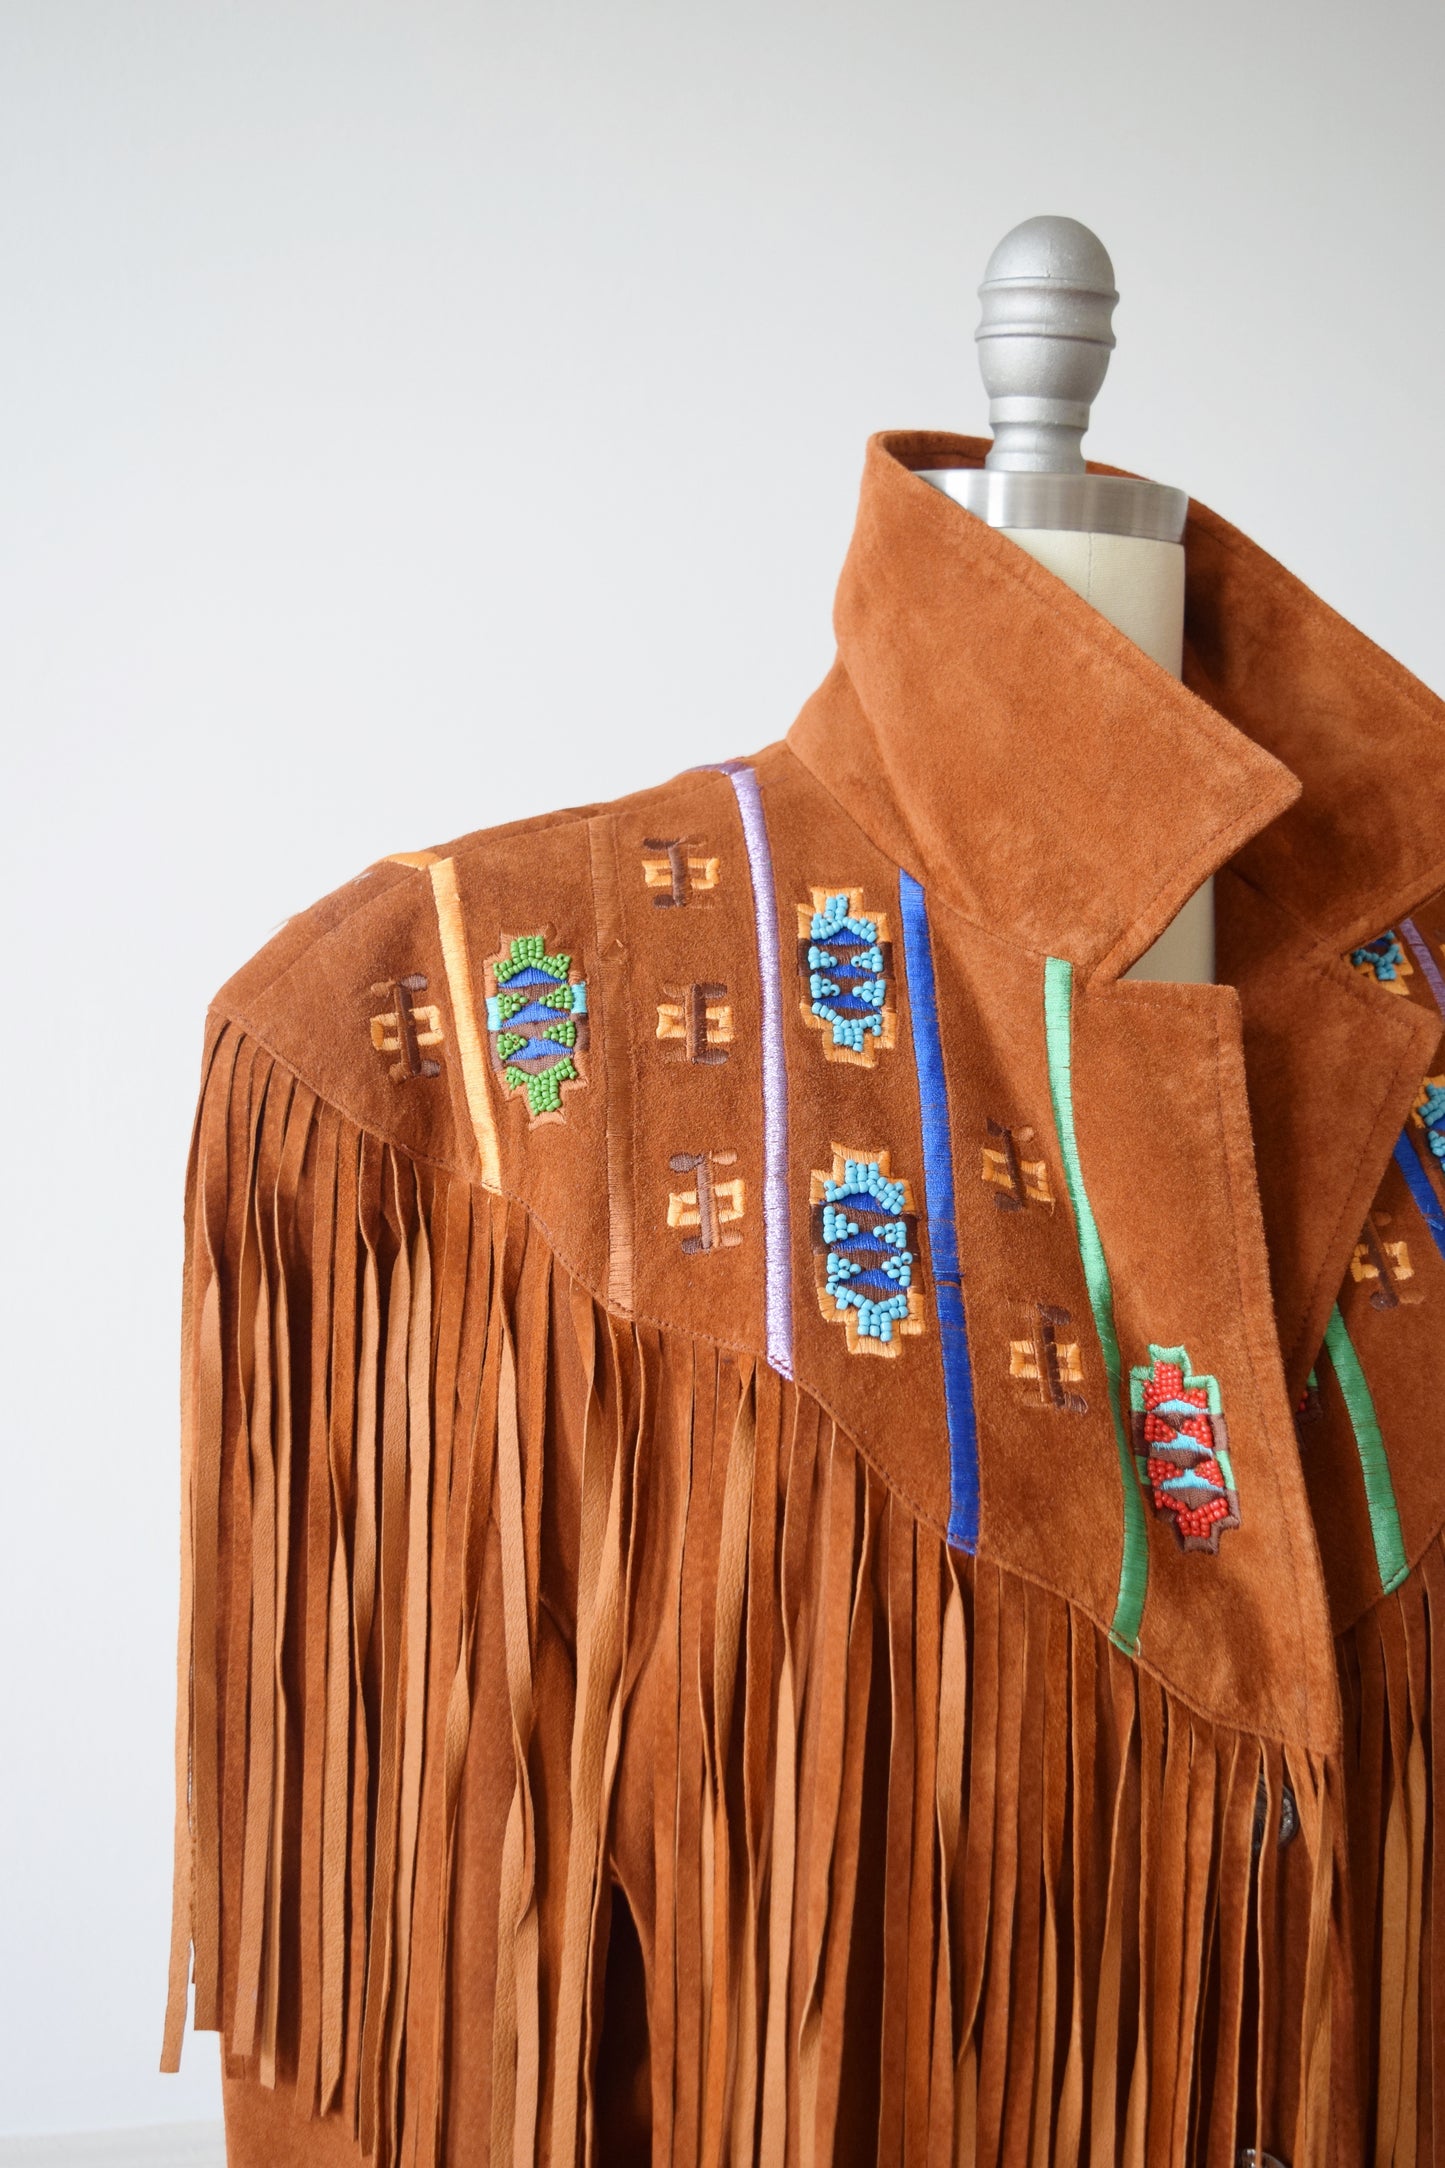 1980s Westernwear Inspired Fringe-tastic Suede Jacket | Tall L